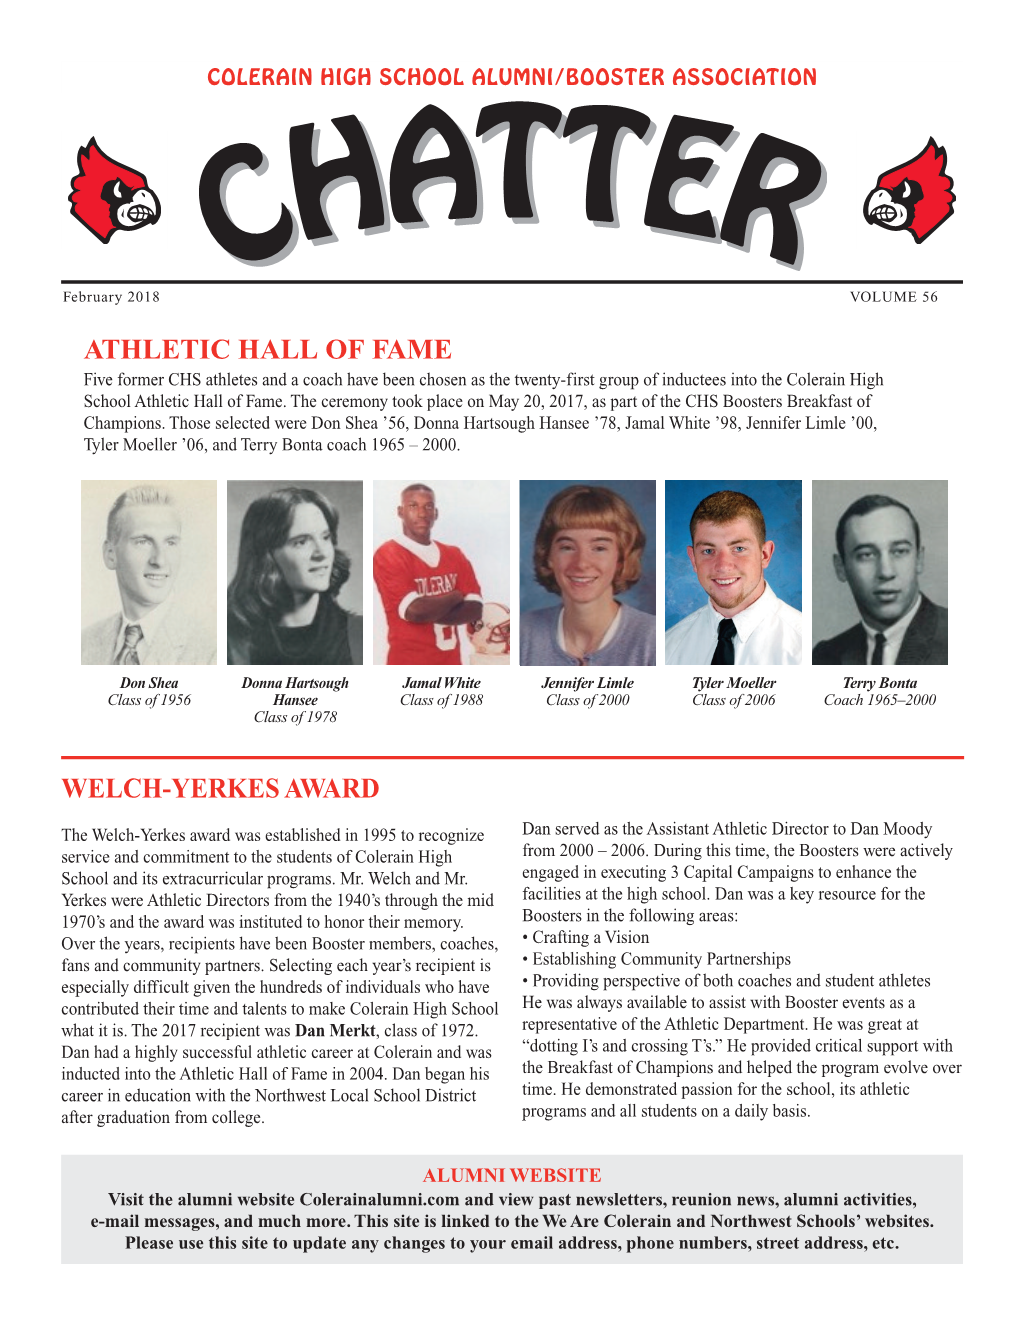 Athletic Hall of Fame Welch-Yerkes Award